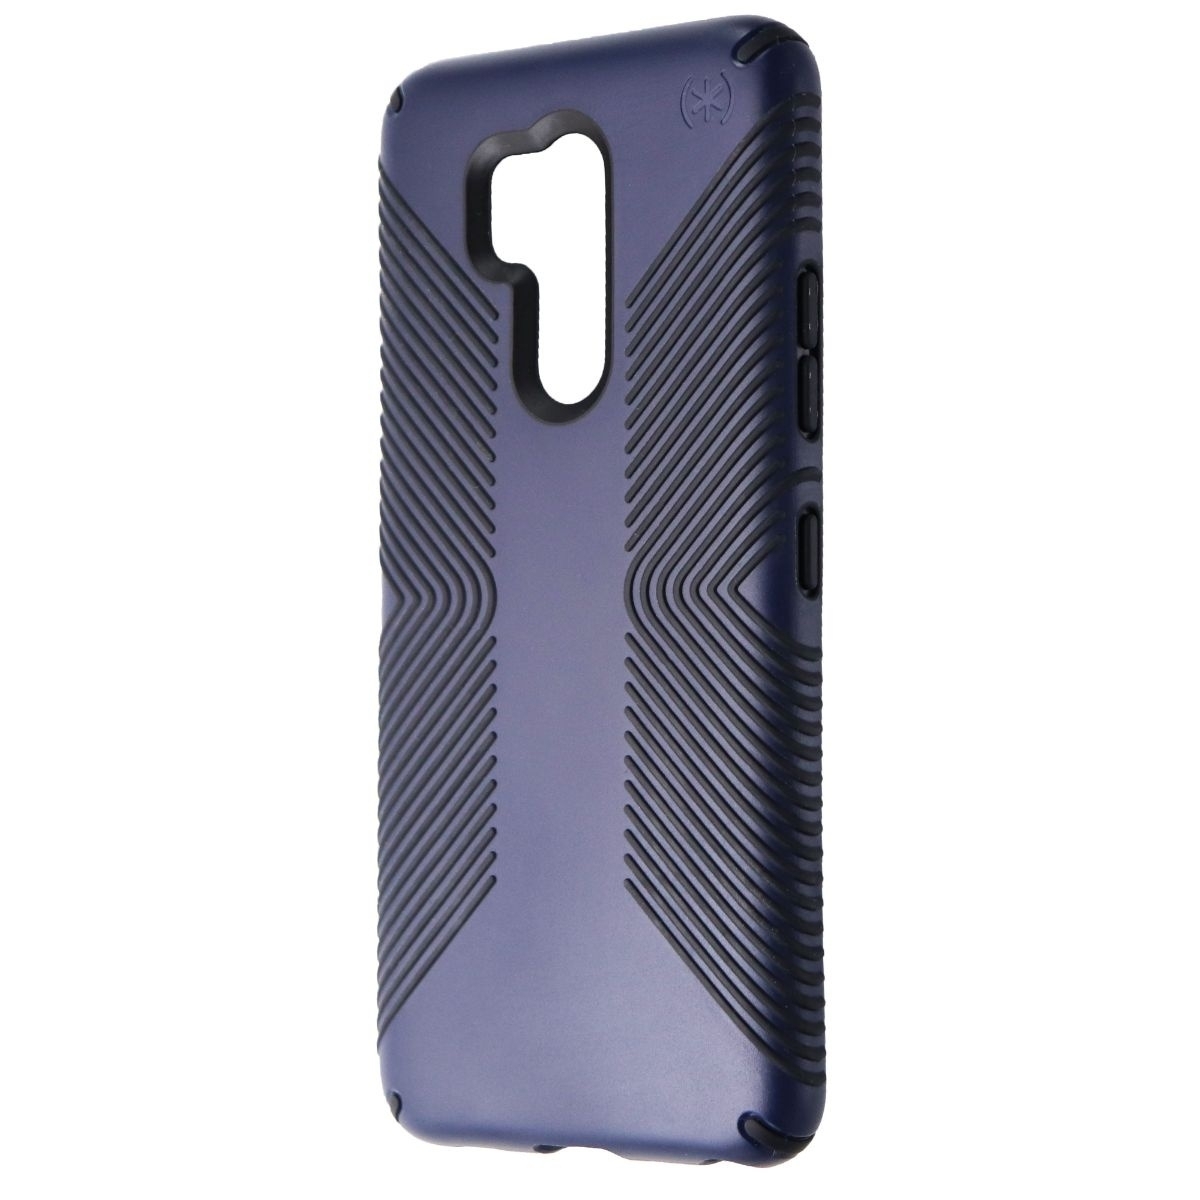 Speck Presidio Grip Phone Case For LG G7 ThinQ - Eclipse Blue / Carbon Black